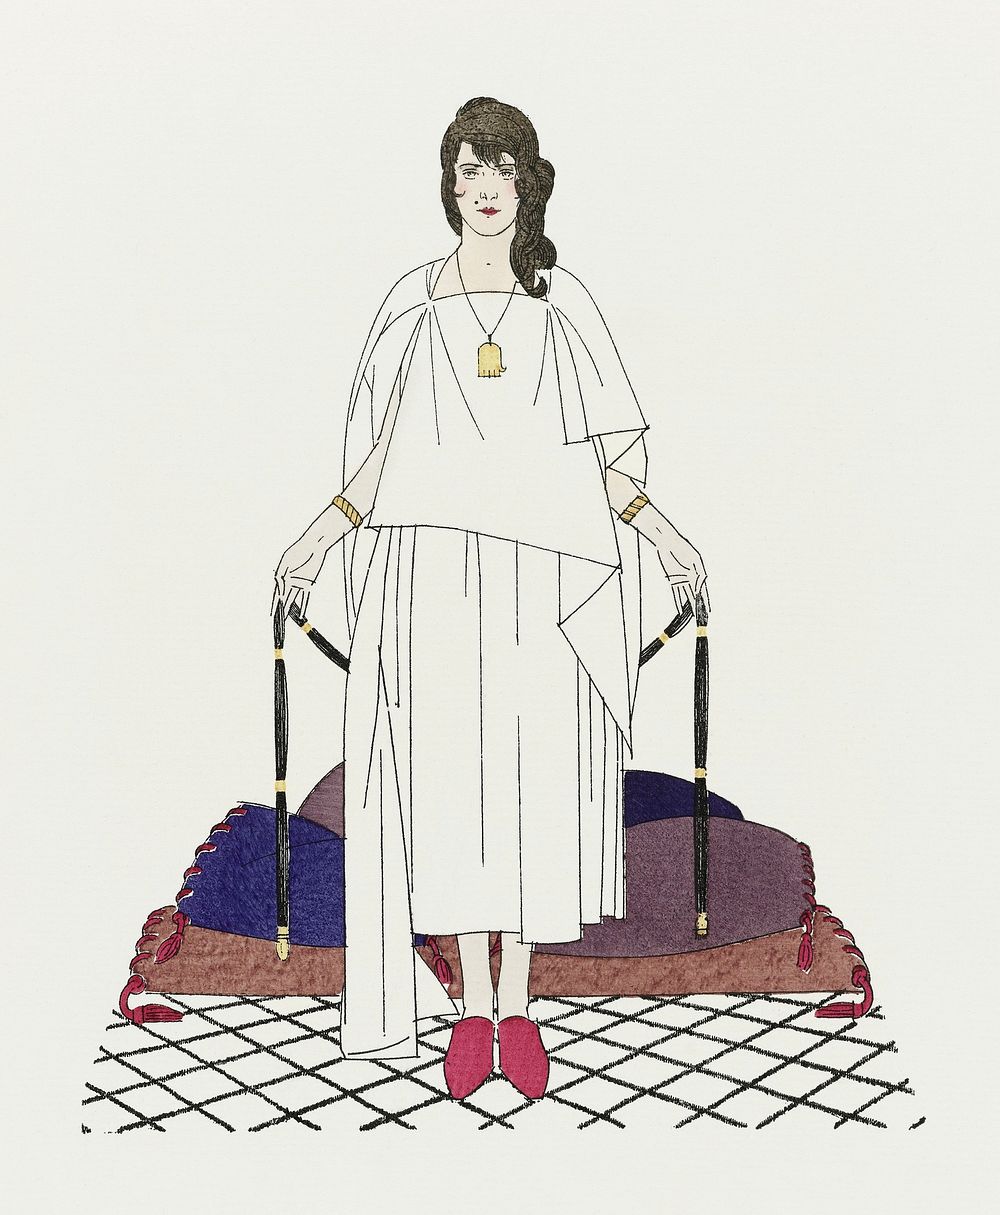 Woman in white vintage flapper dress, remixed from the artworks by Bernard Boutet de Monvel